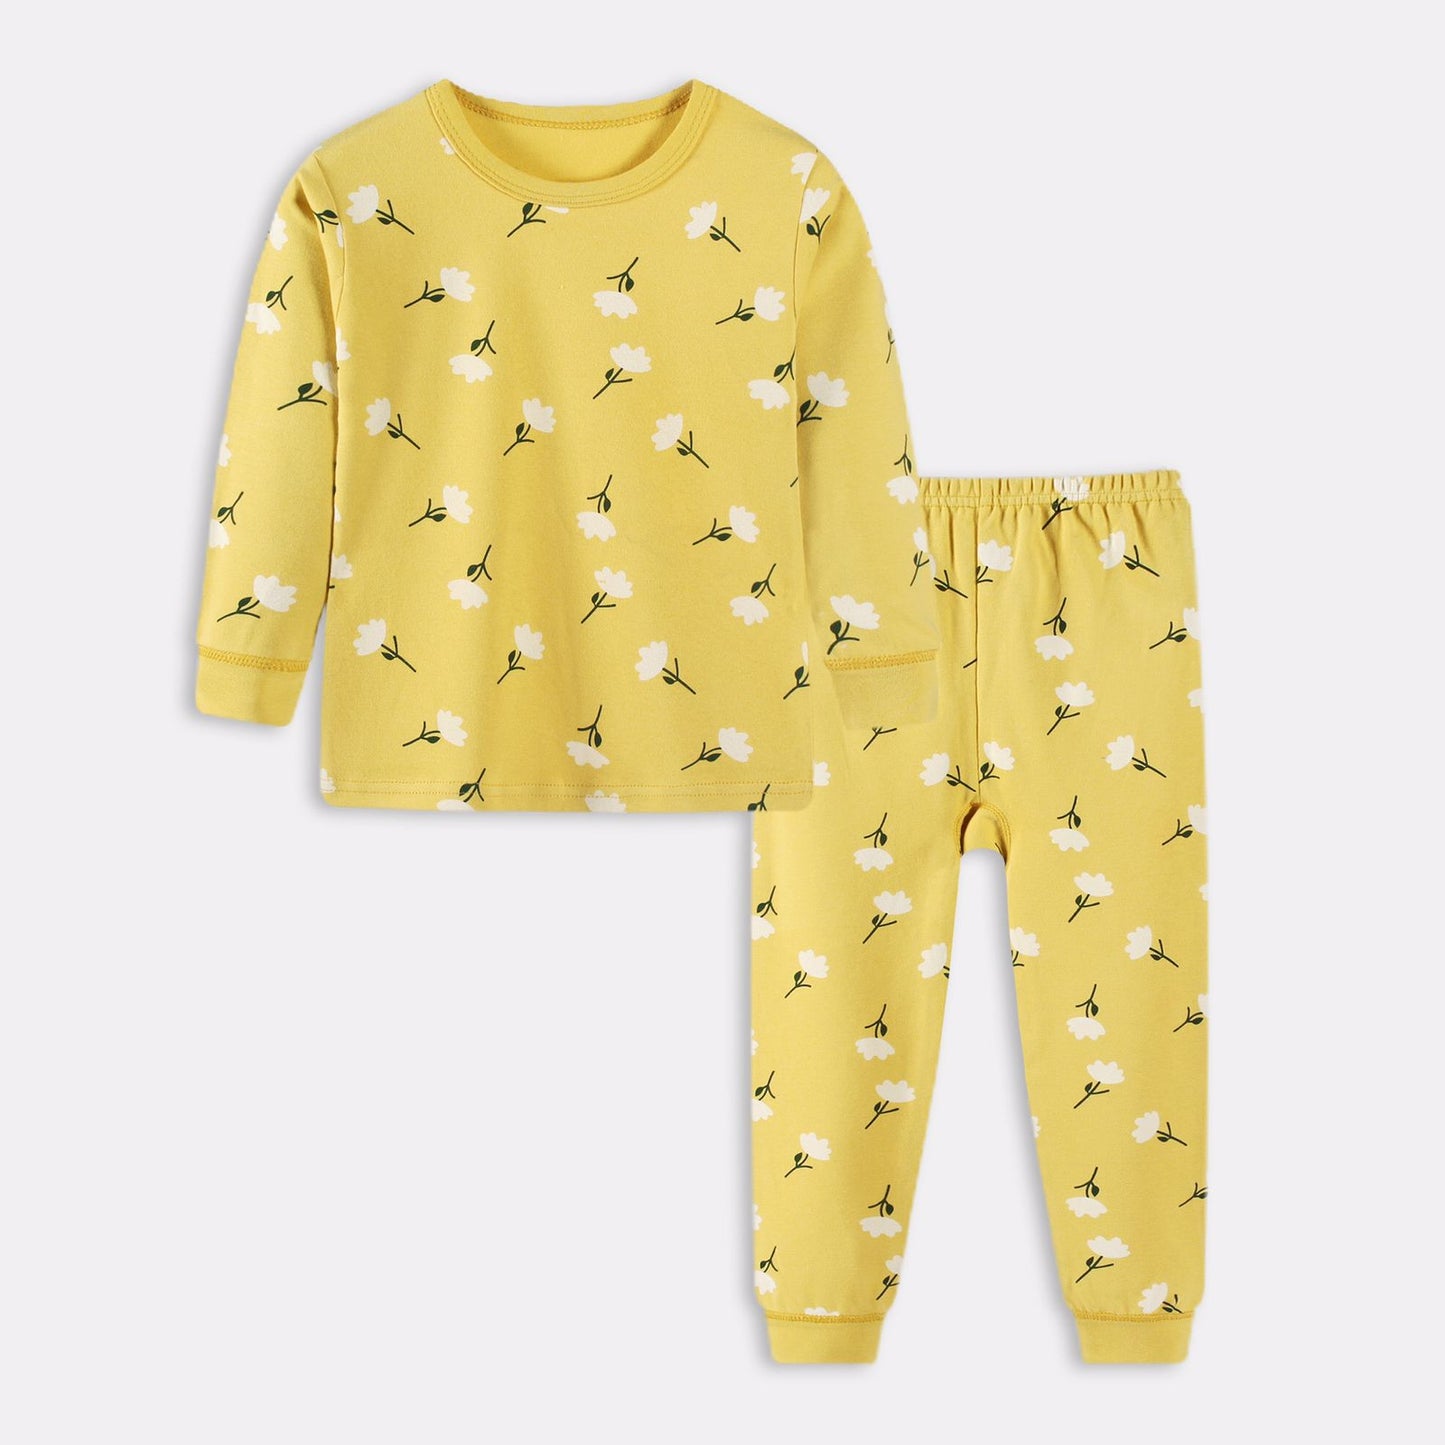 Colorful Patterns Children's Sleepwear Pajama Flower Yellow